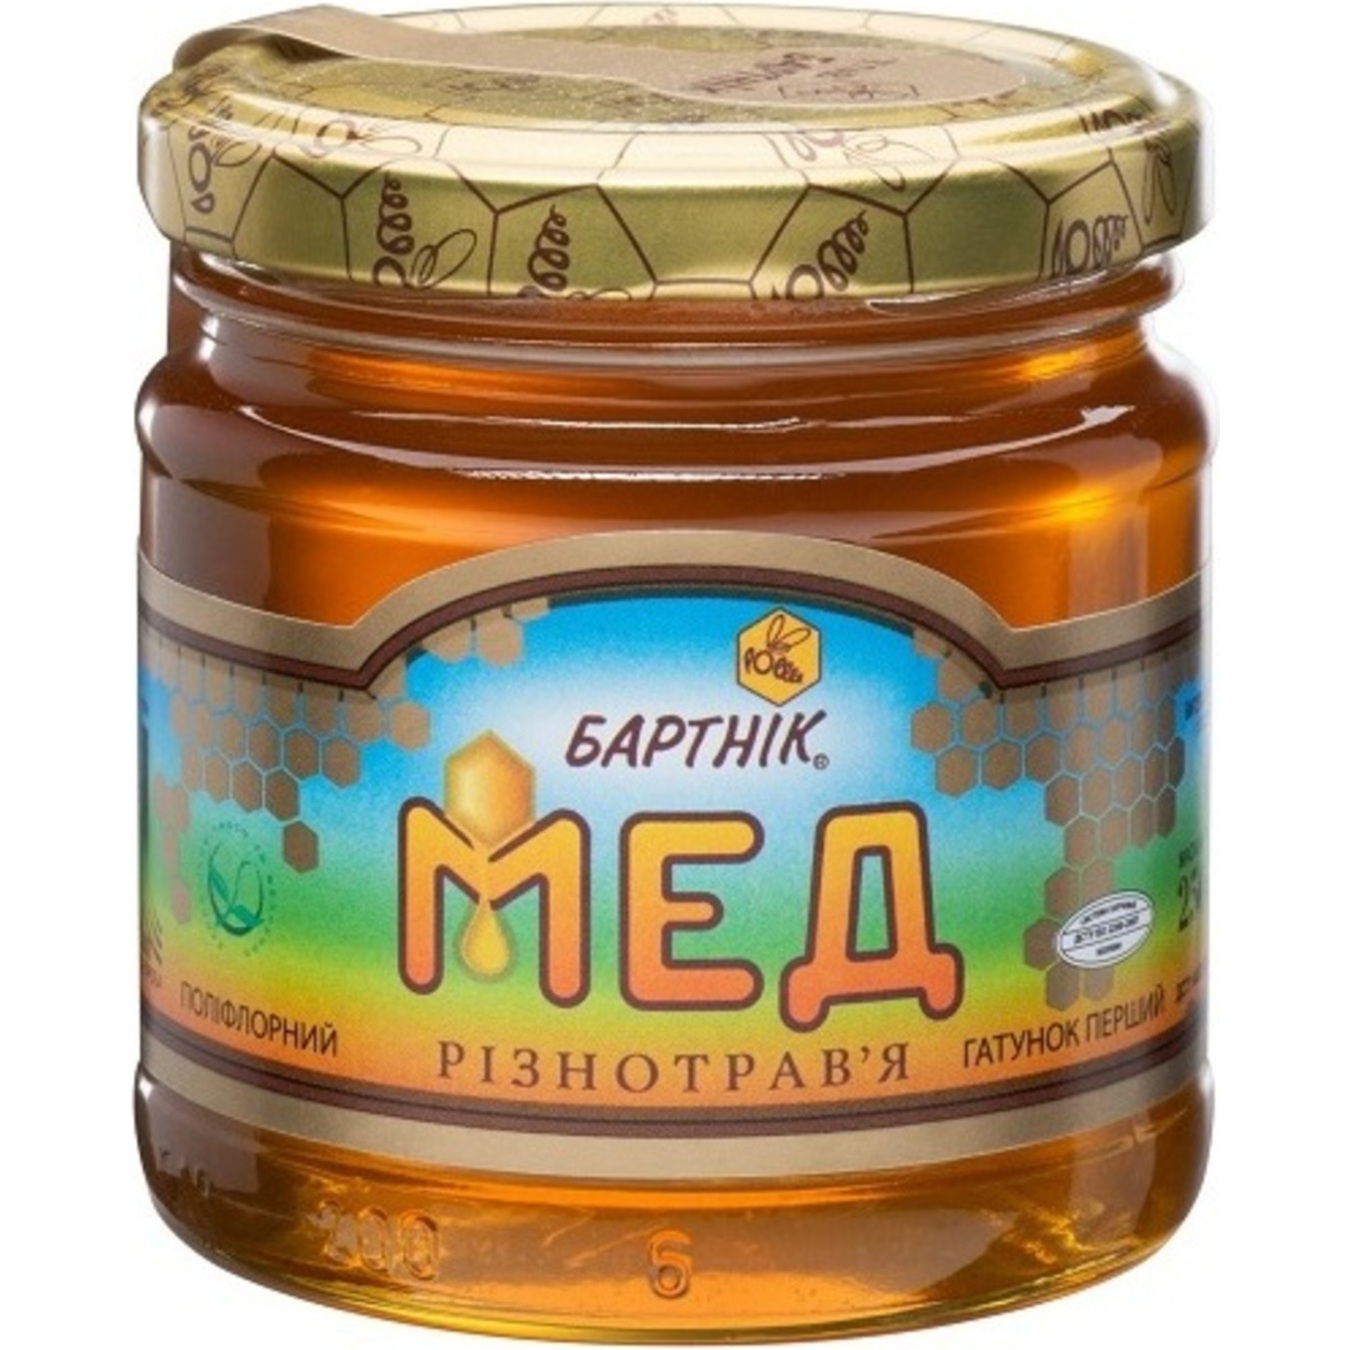 Bartnik Natural Herbs Honey 250g